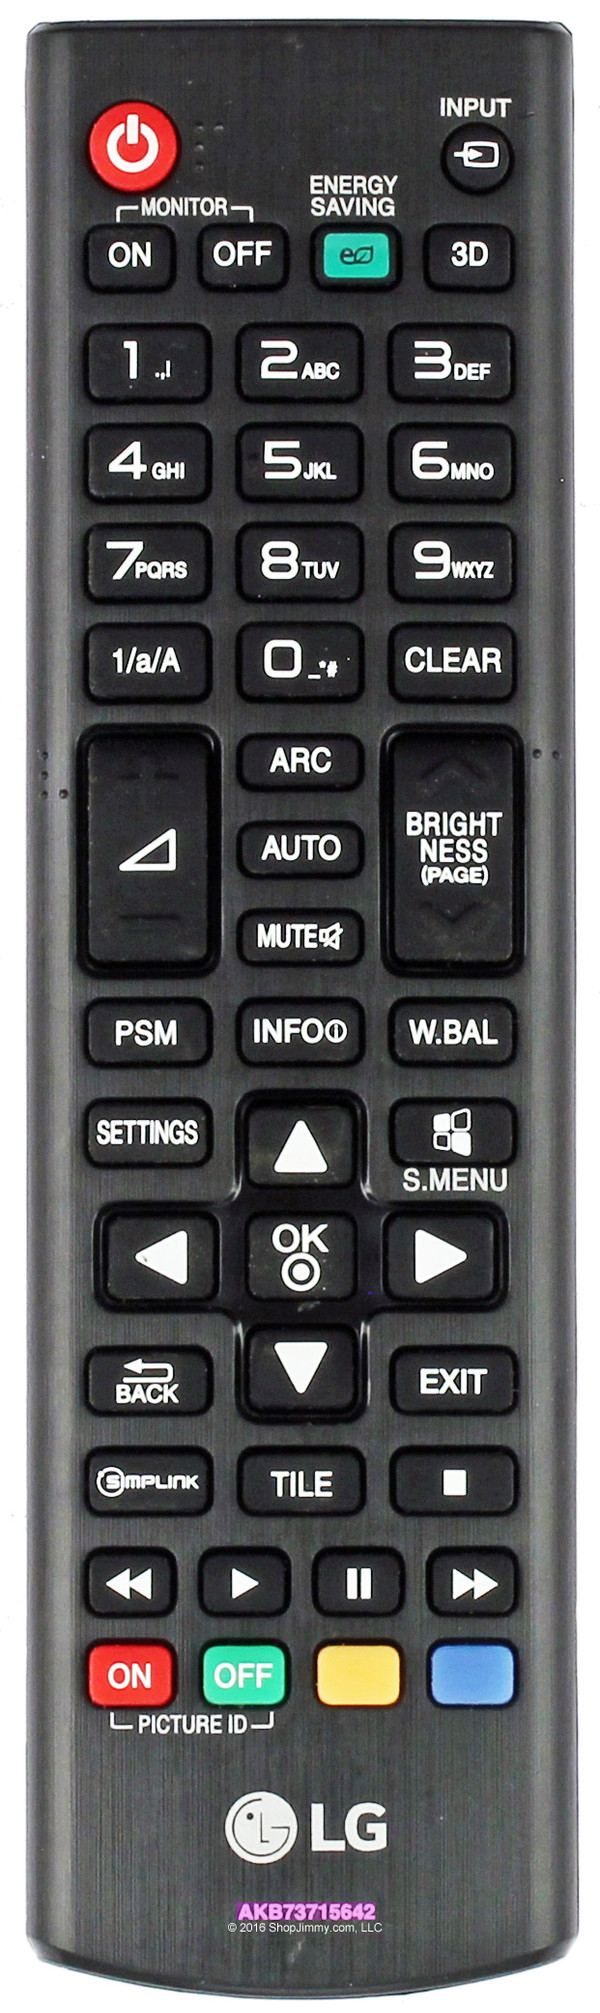 LG AKB73715642 Remote Control - New